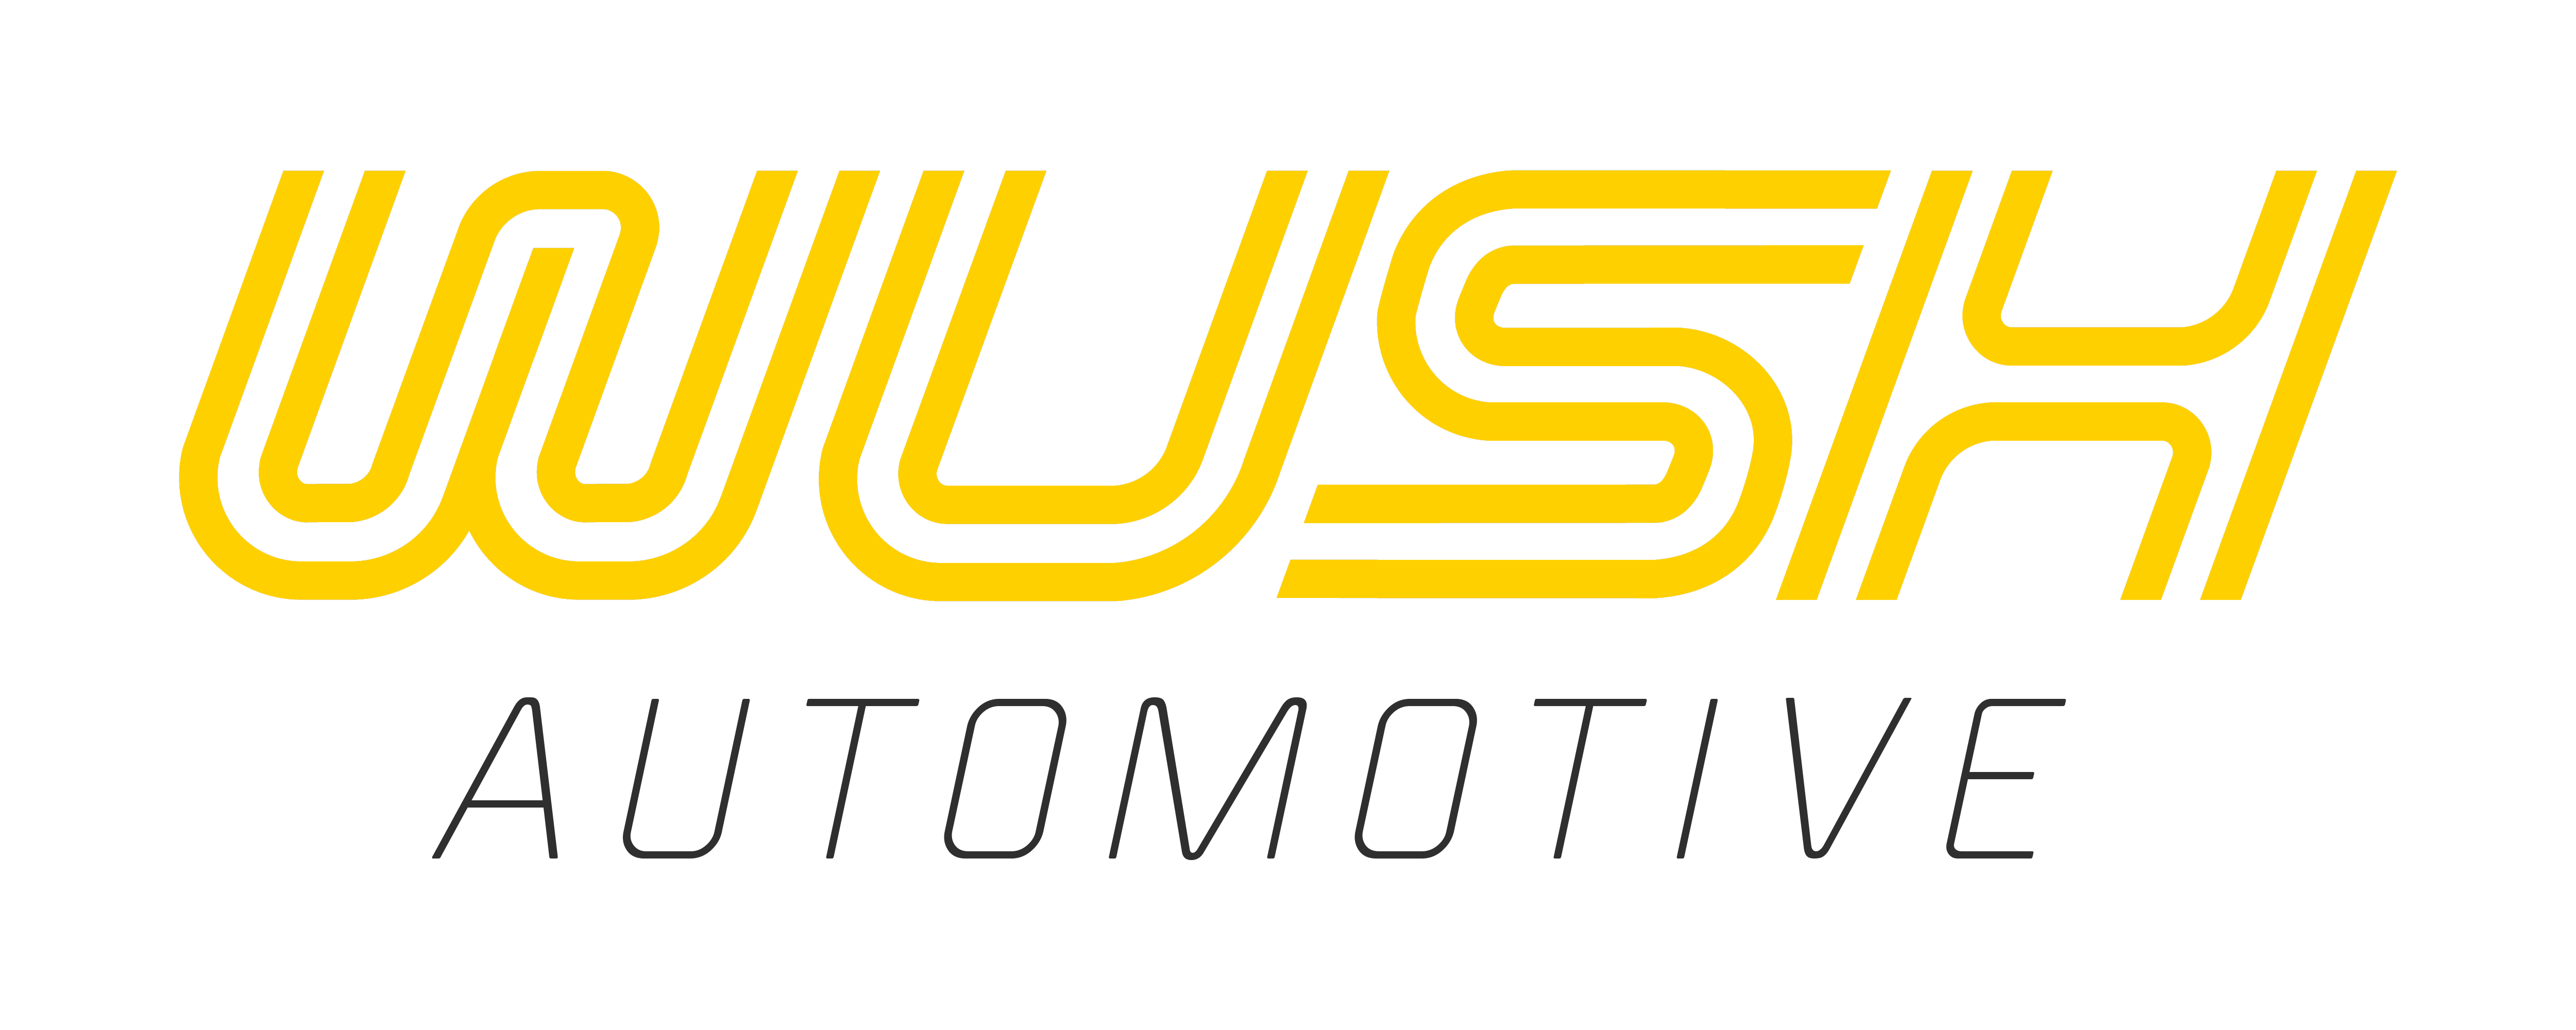 Wush Automotive | Strength through Dedication